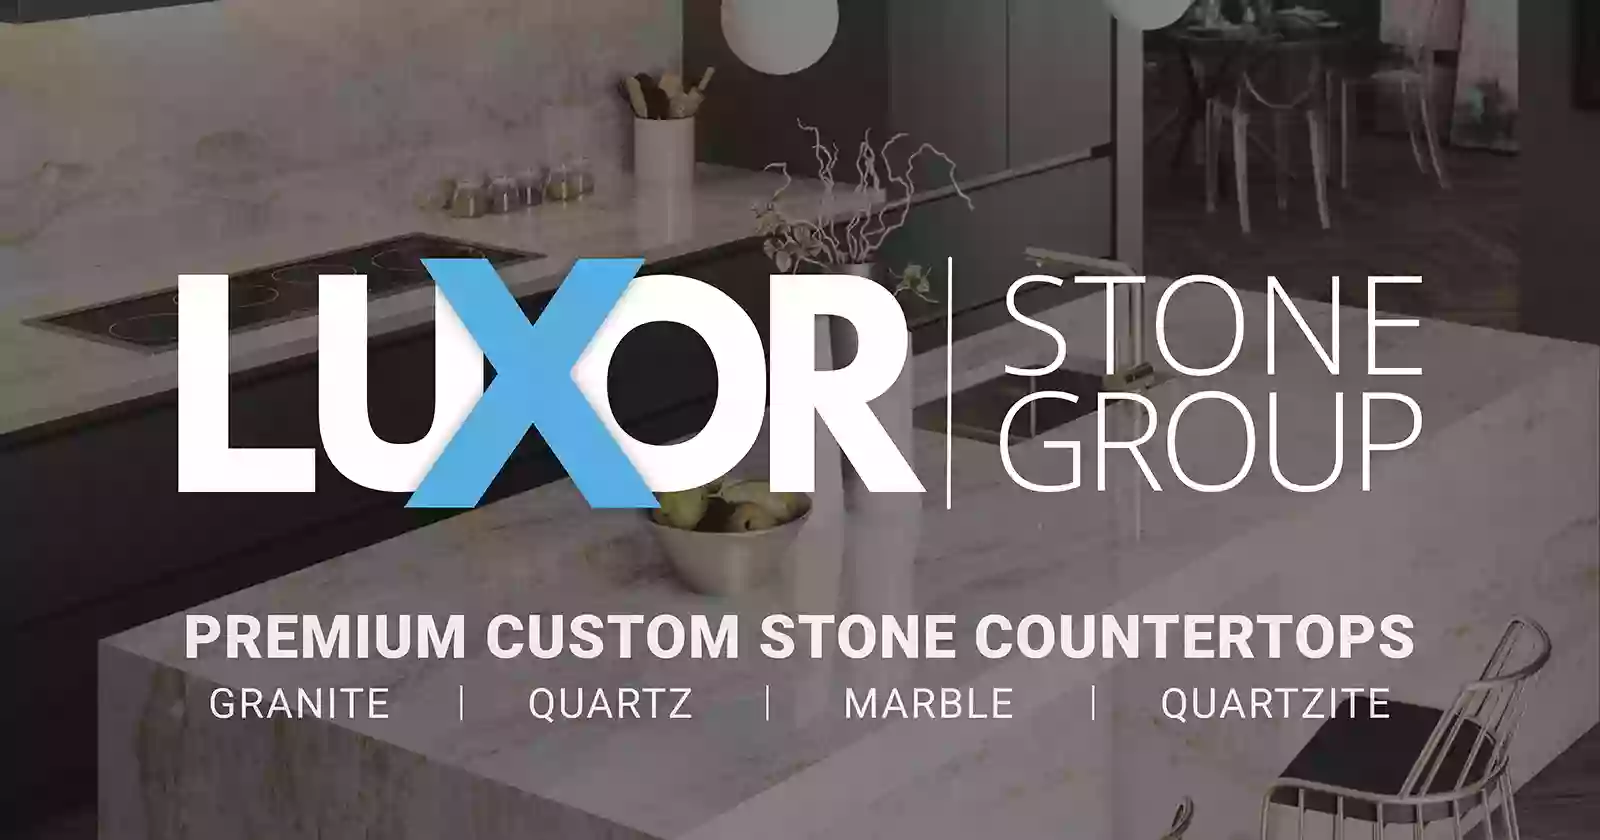 Luxor Stone Group